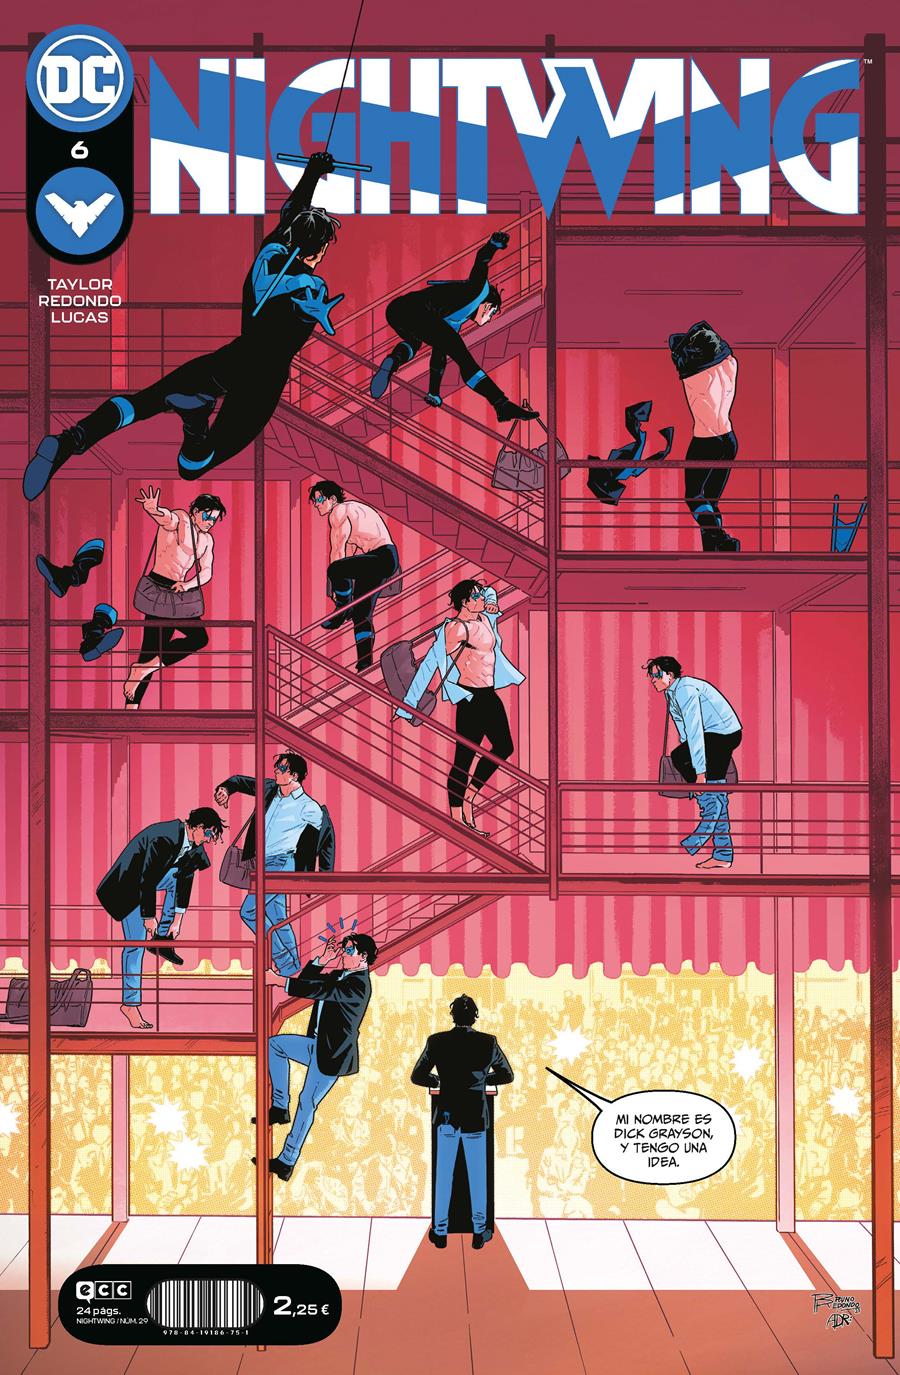 Nightwing núm. 06 | N0322-ECC26 | Bruno Redondo / Tom Taylor | Terra de Còmic - Tu tienda de cómics online especializada en cómics, manga y merchandising